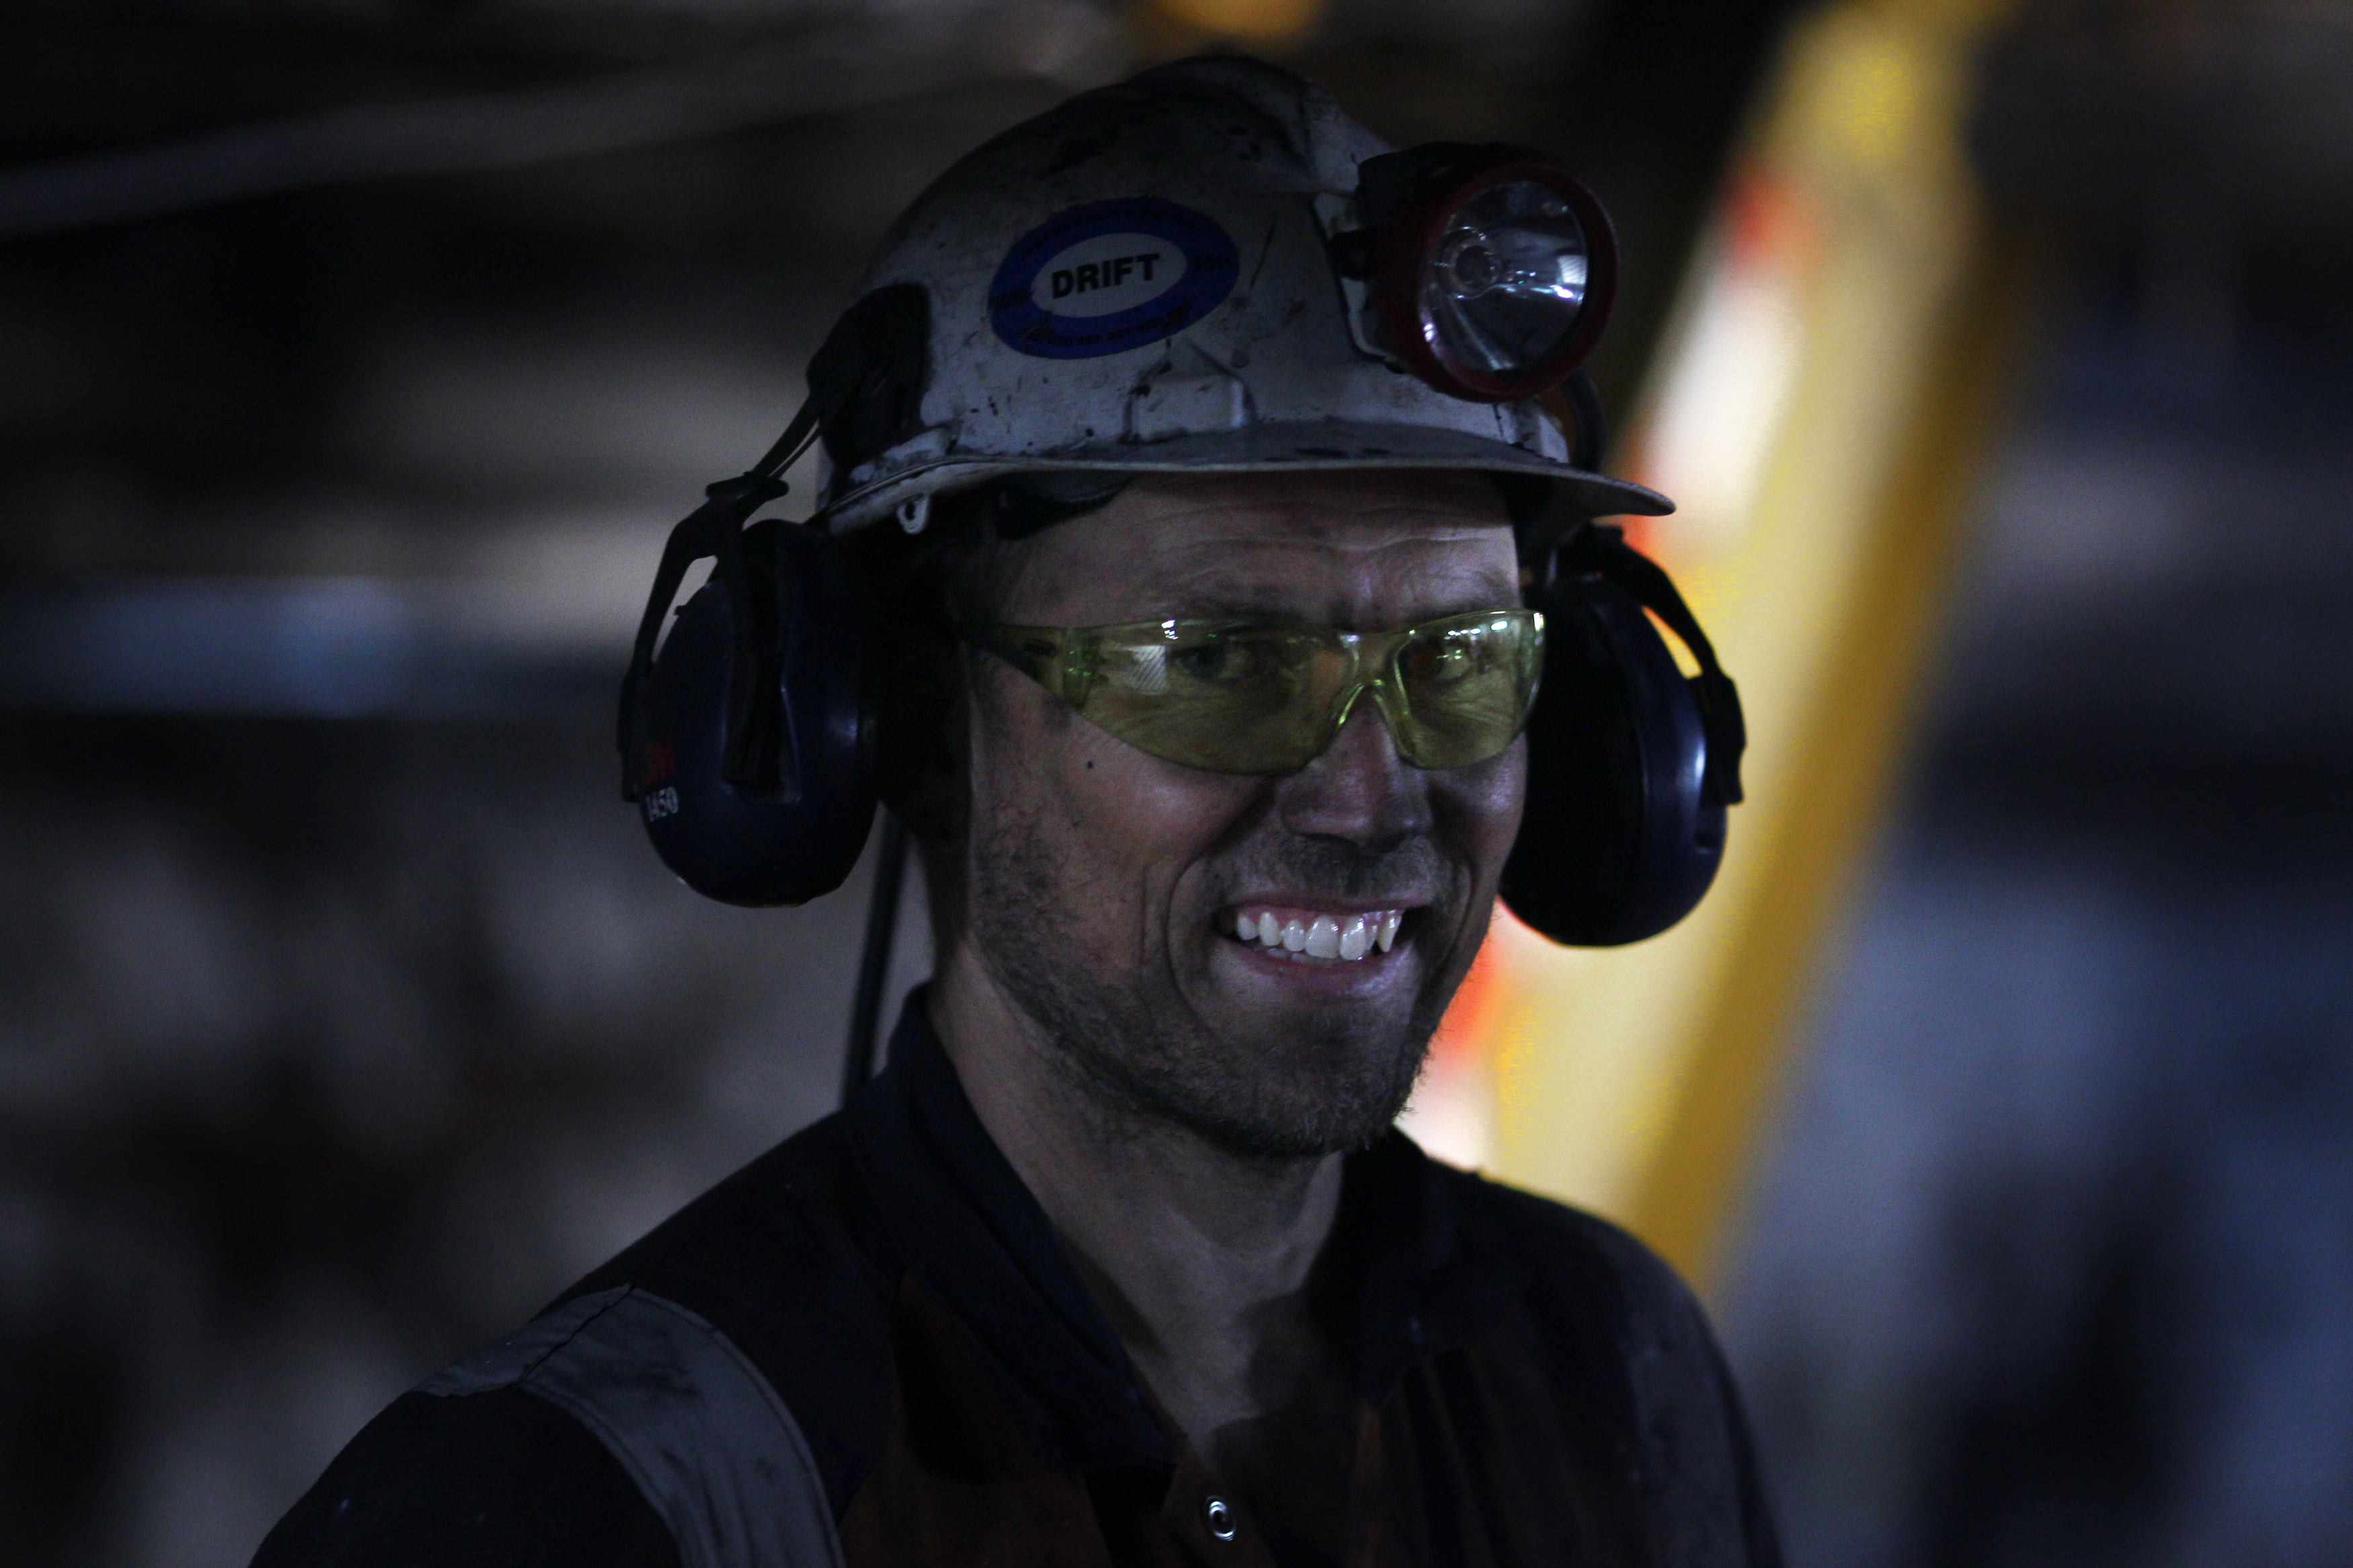 A coal miner smiles as he exits the Metropolitan coal mine at Helensburgh